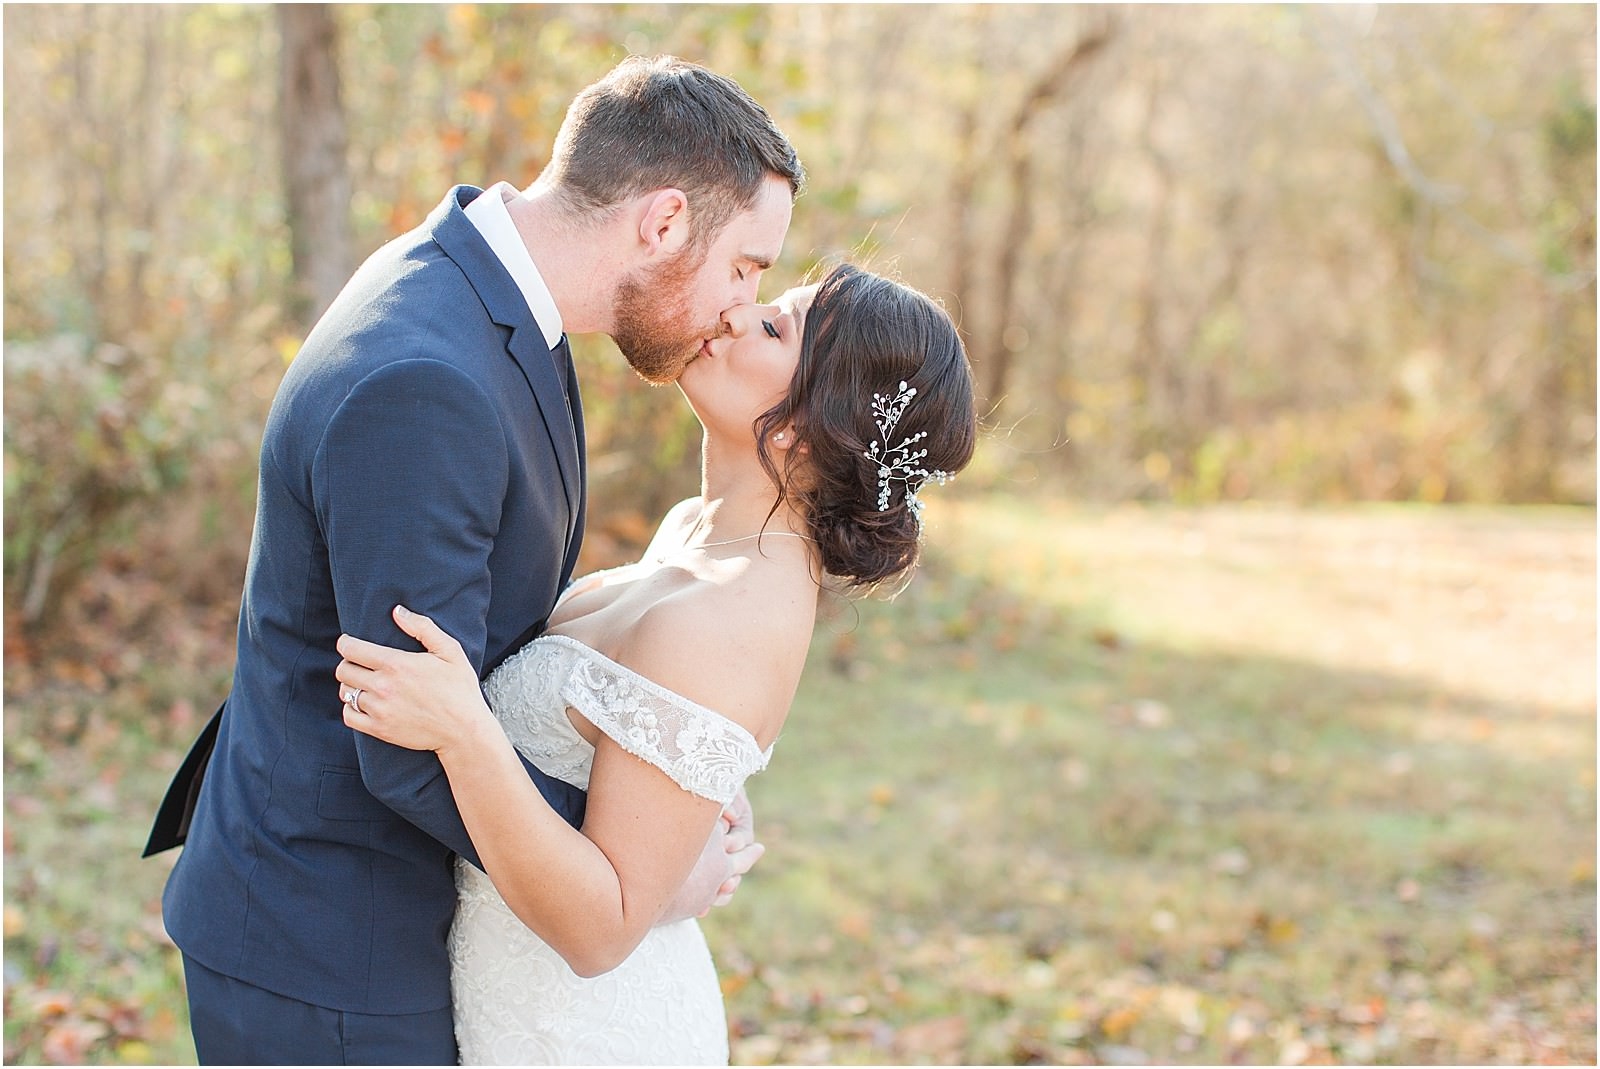 Walker and Alyssa's intimate fall wedding in Southern Indiana. | Wedding Photography | The Corner House Wedding | Southern Indiana Wedding | #fallwedding #intimatewedding | 035.jpg